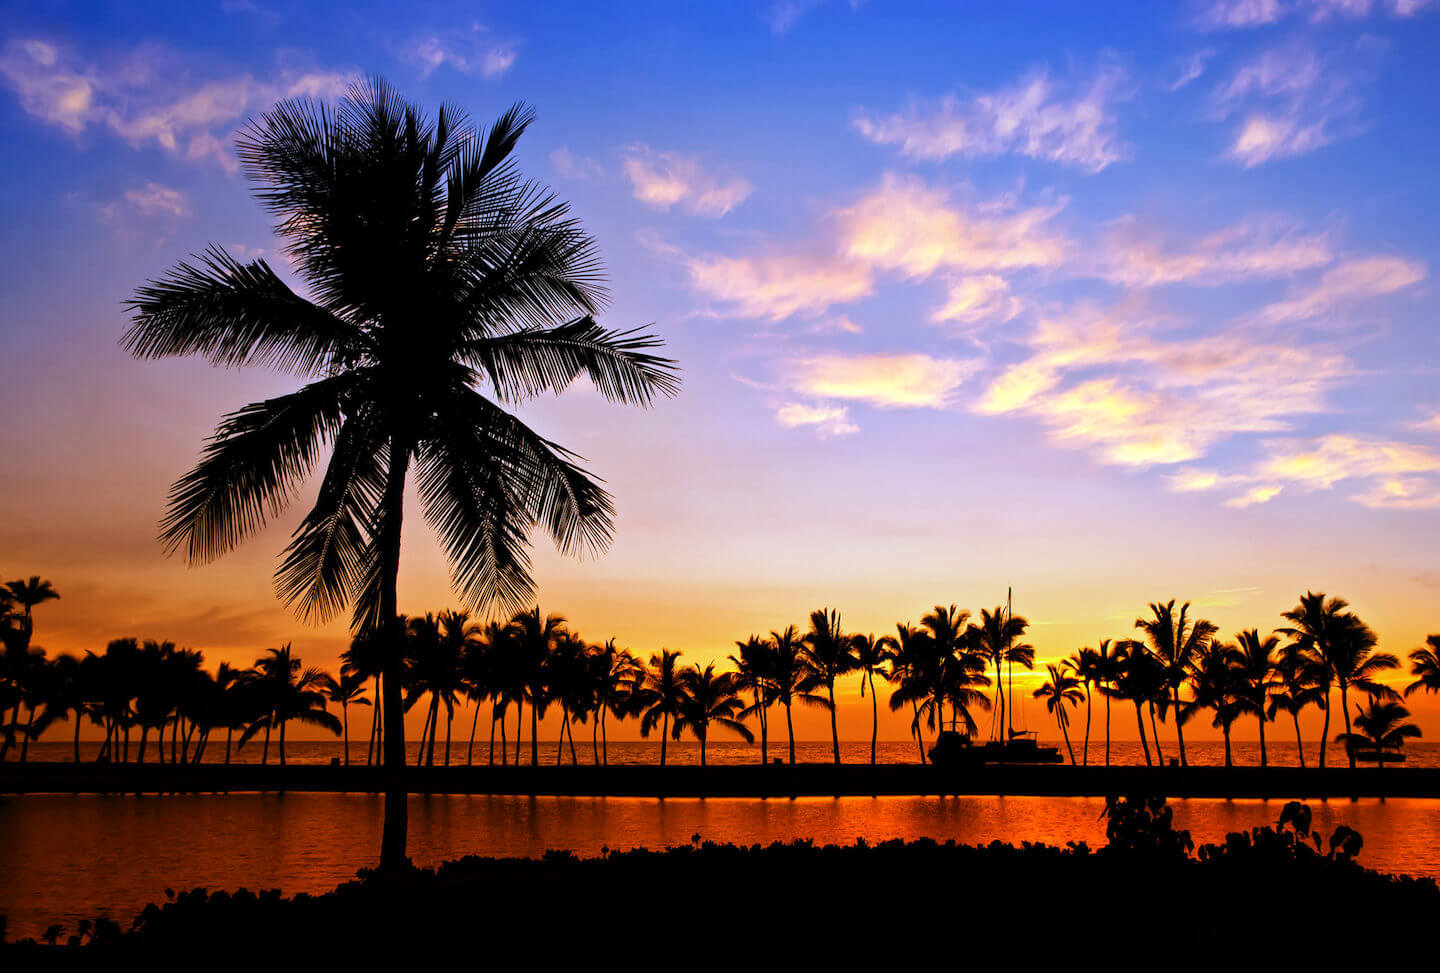 Stock photo of Honolulu (sunset view at the beach)